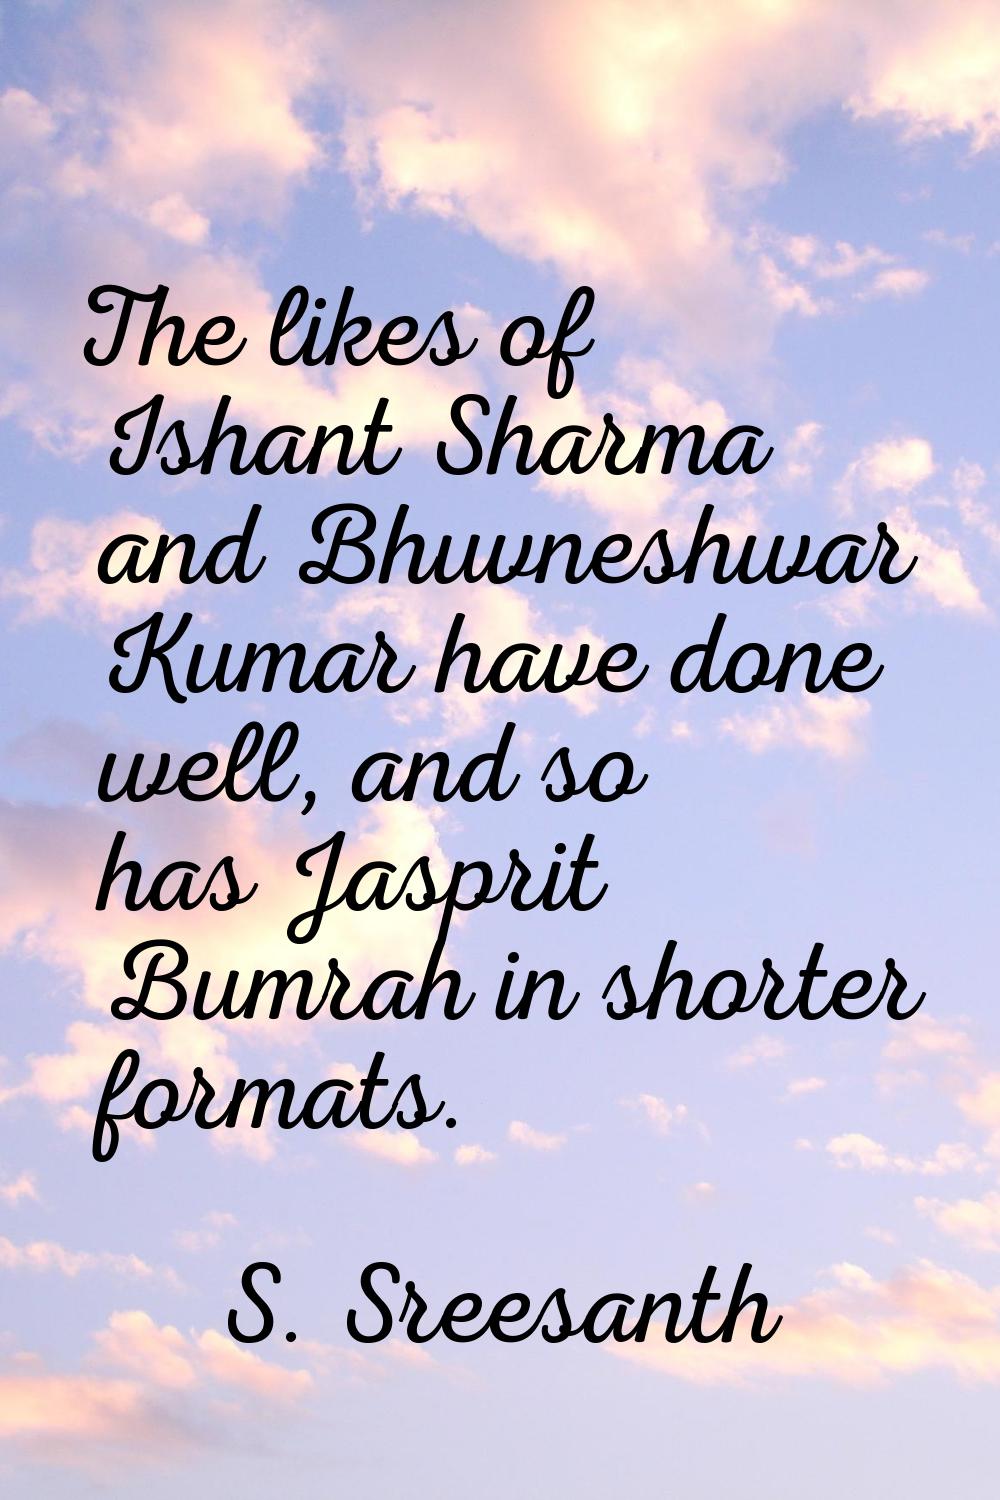 The likes of Ishant Sharma and Bhuvneshwar Kumar have done well, and so has Jasprit Bumrah in short